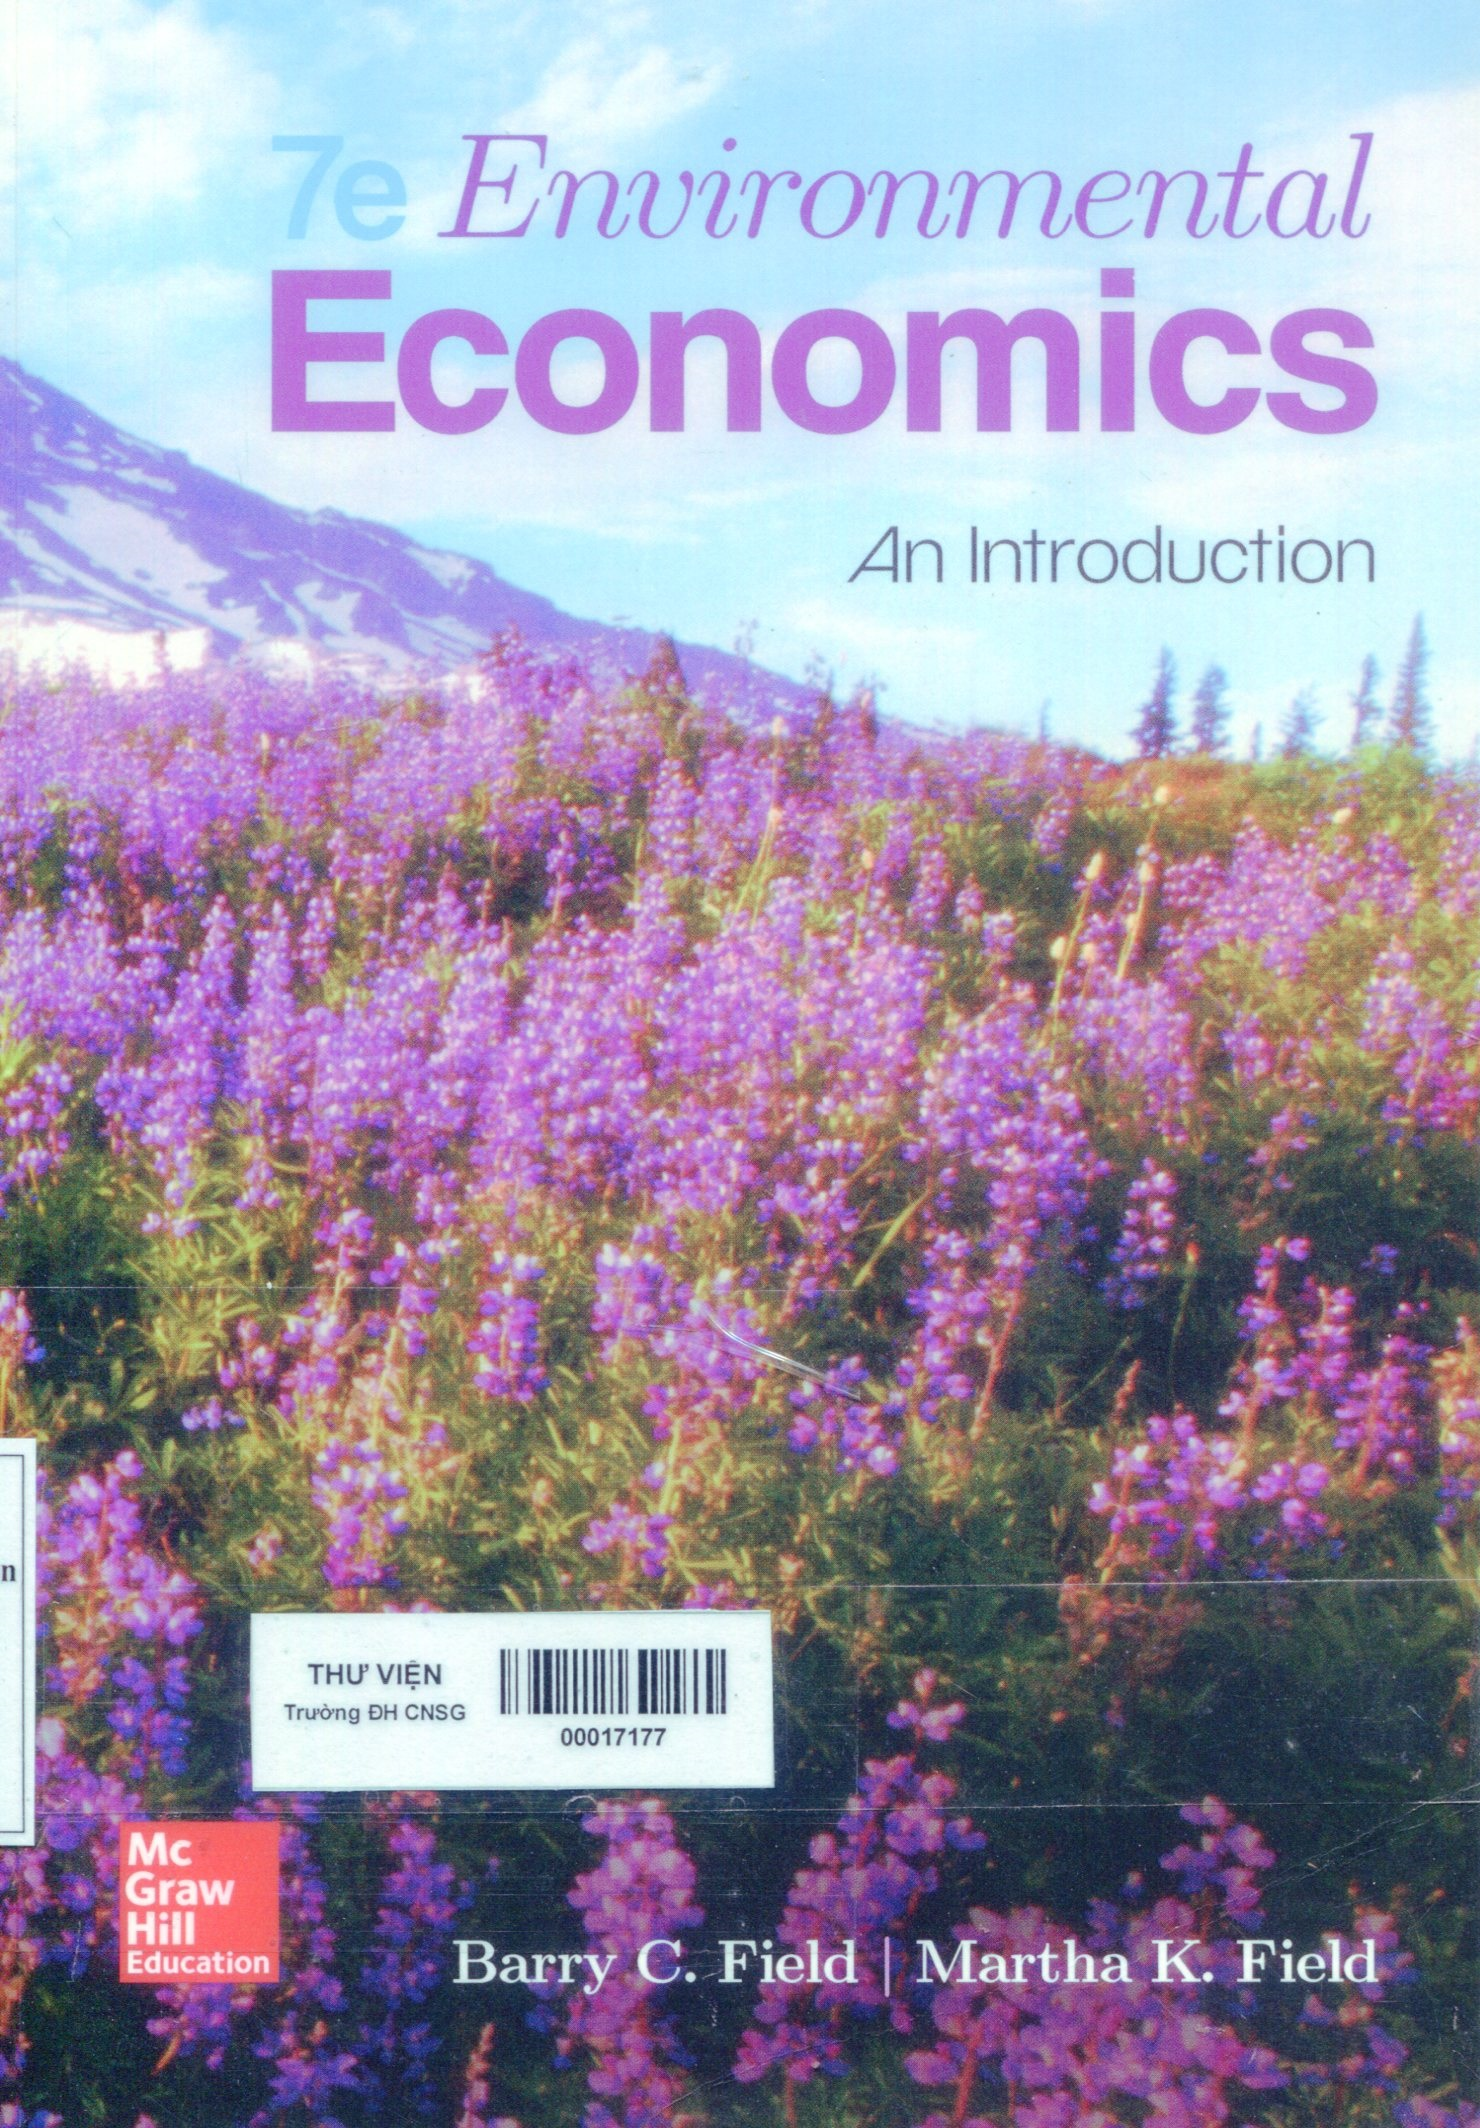 Environmental economics : an introduction